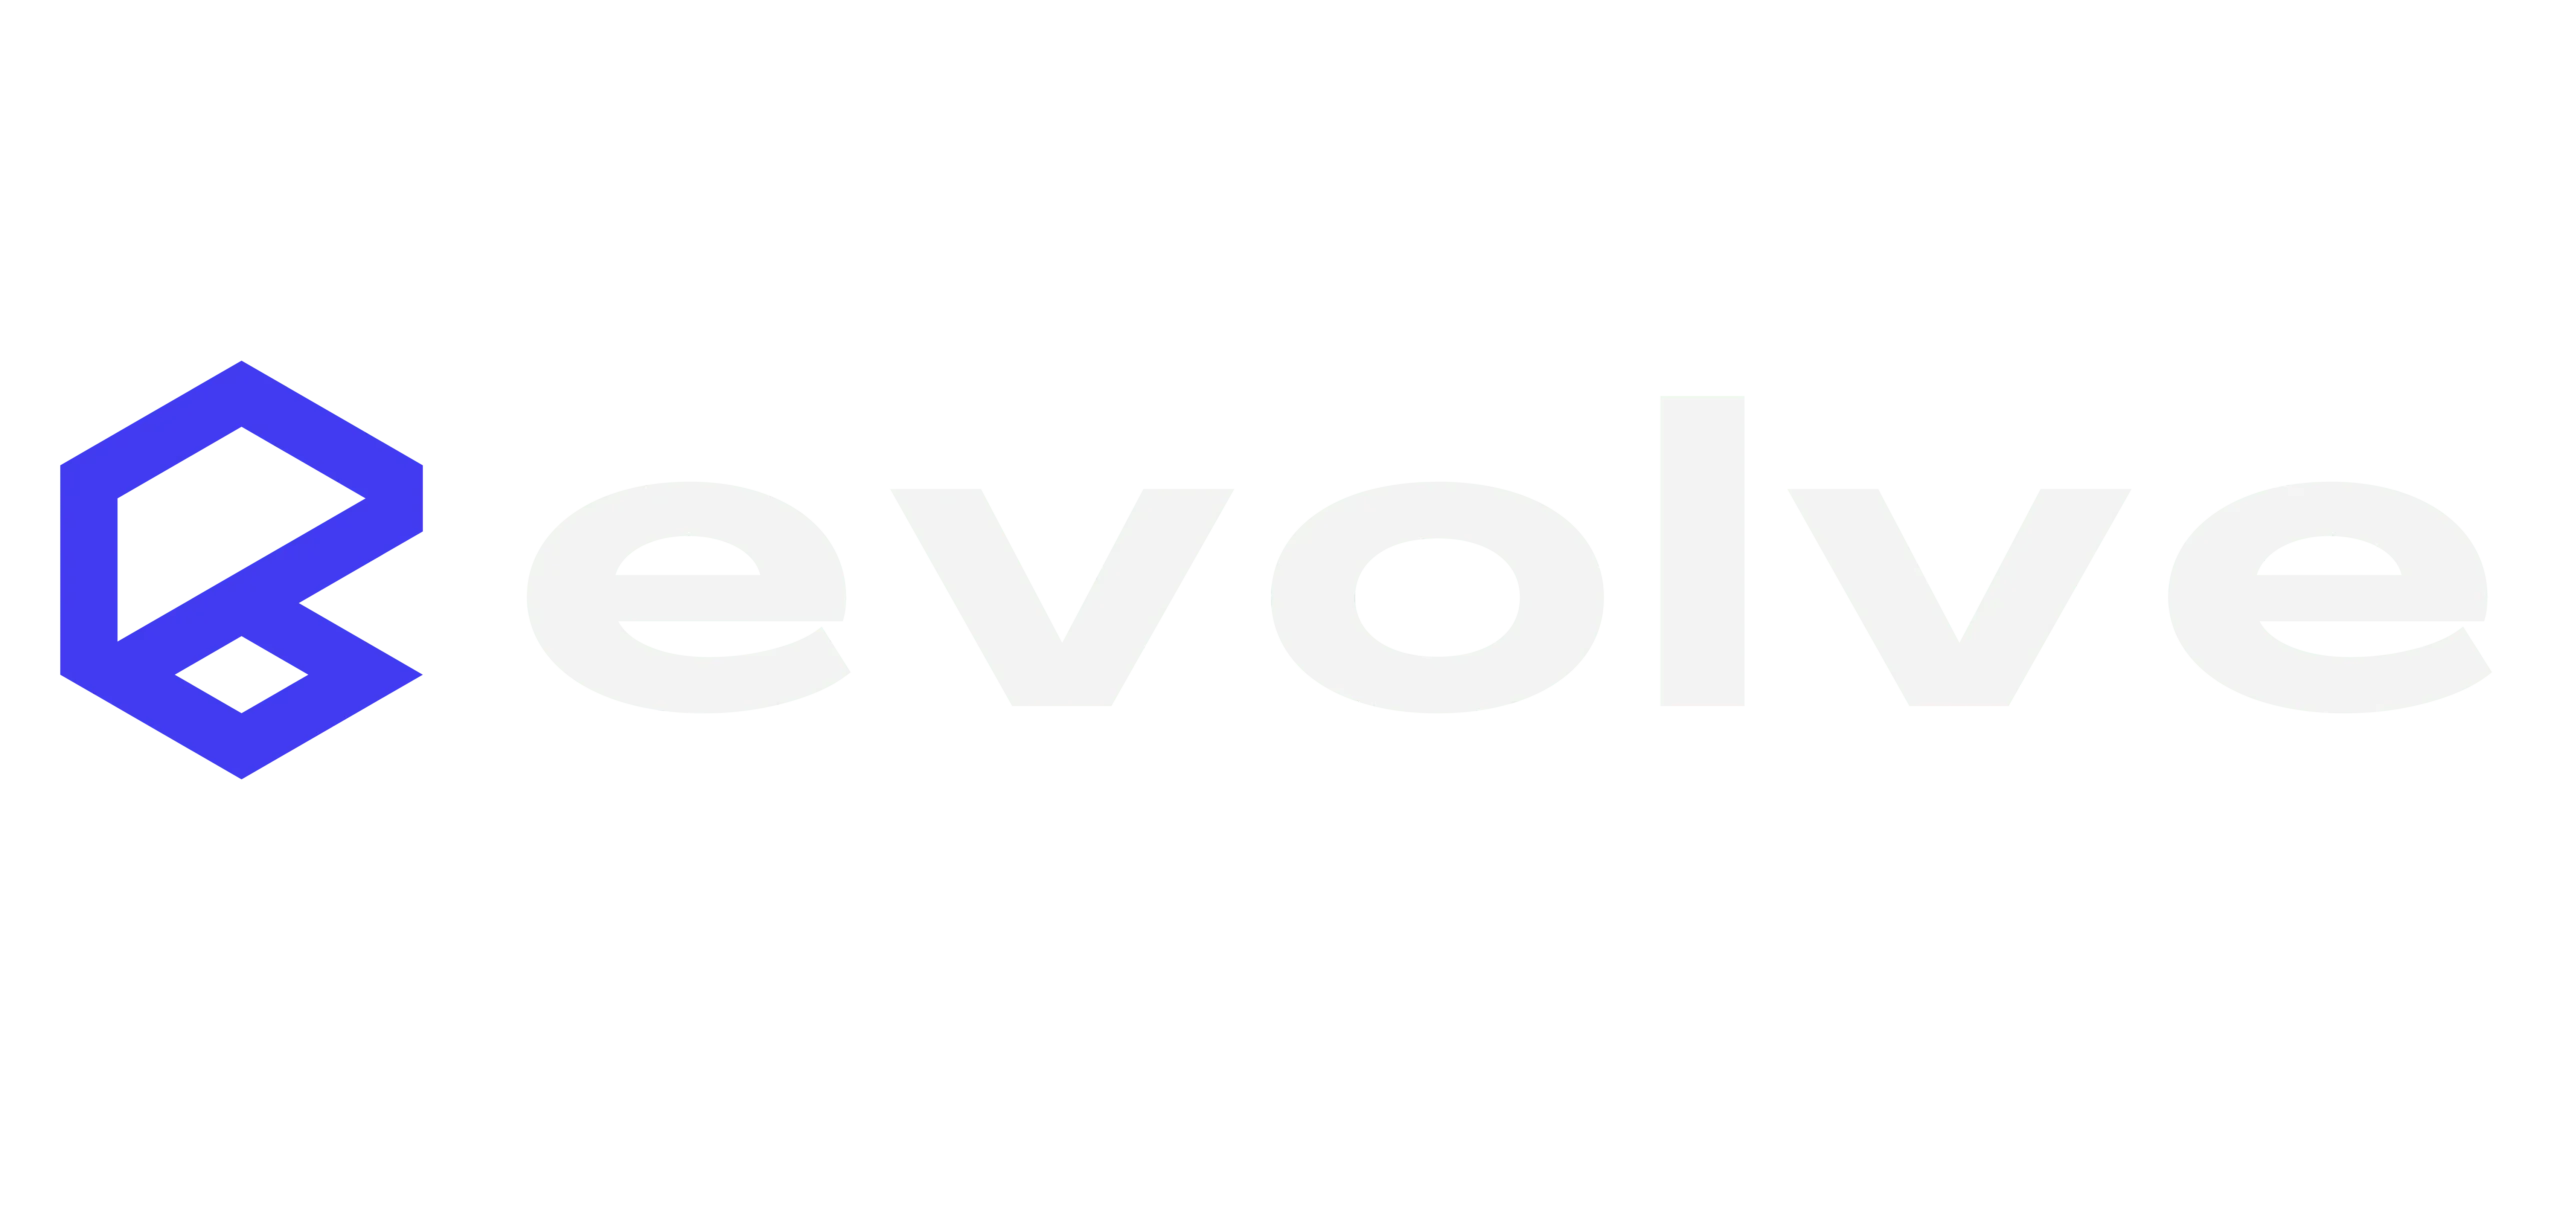 Evolve Digital - website header logo white (mobile devices)